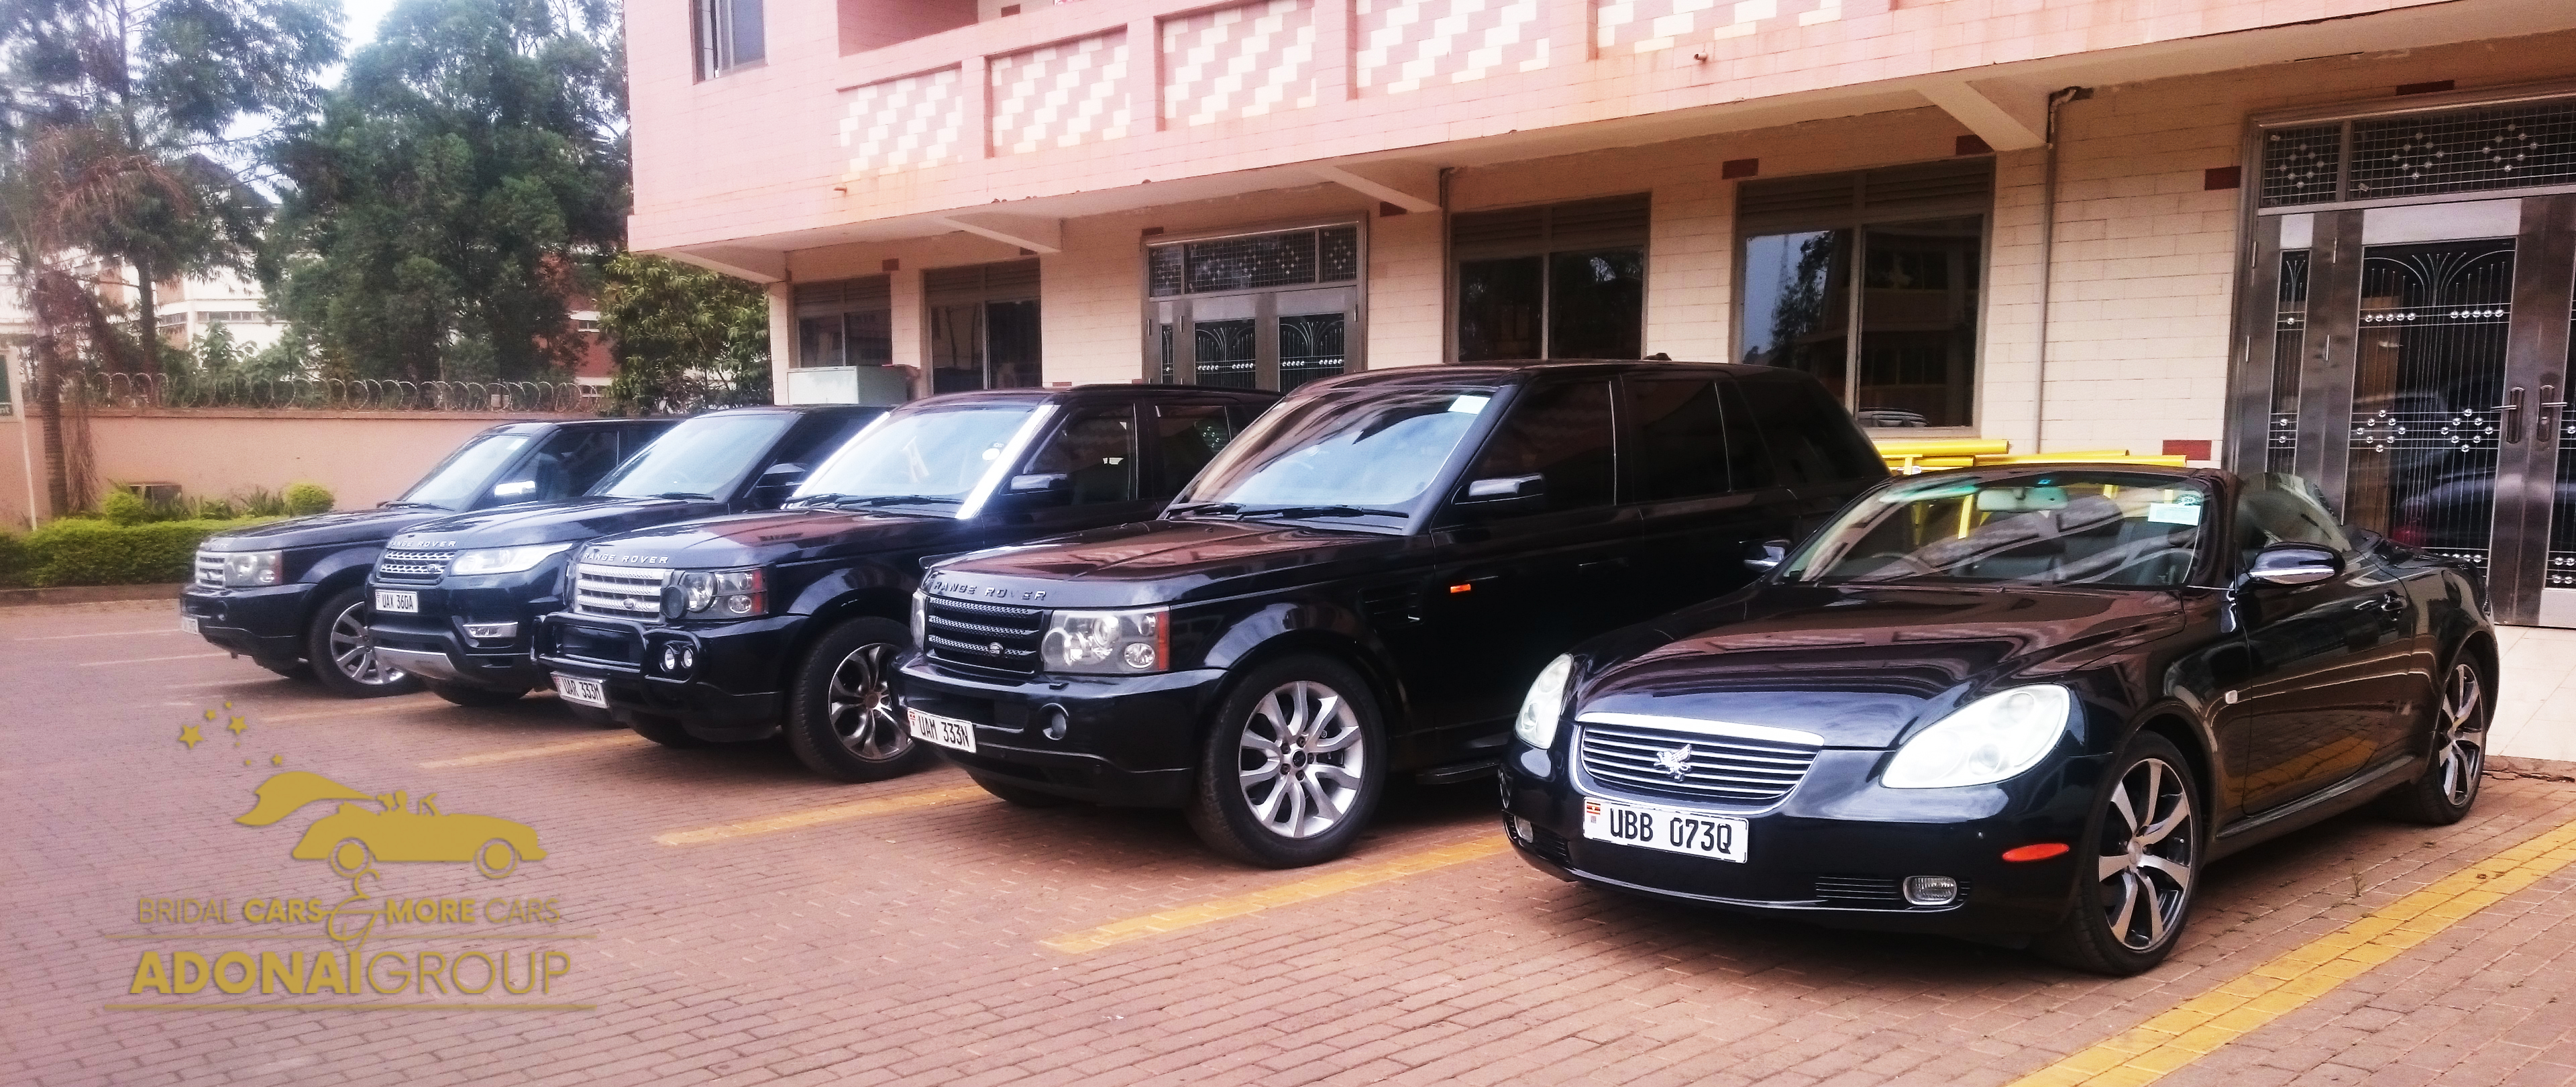 A fleet of black bridal cars from Adonai Group